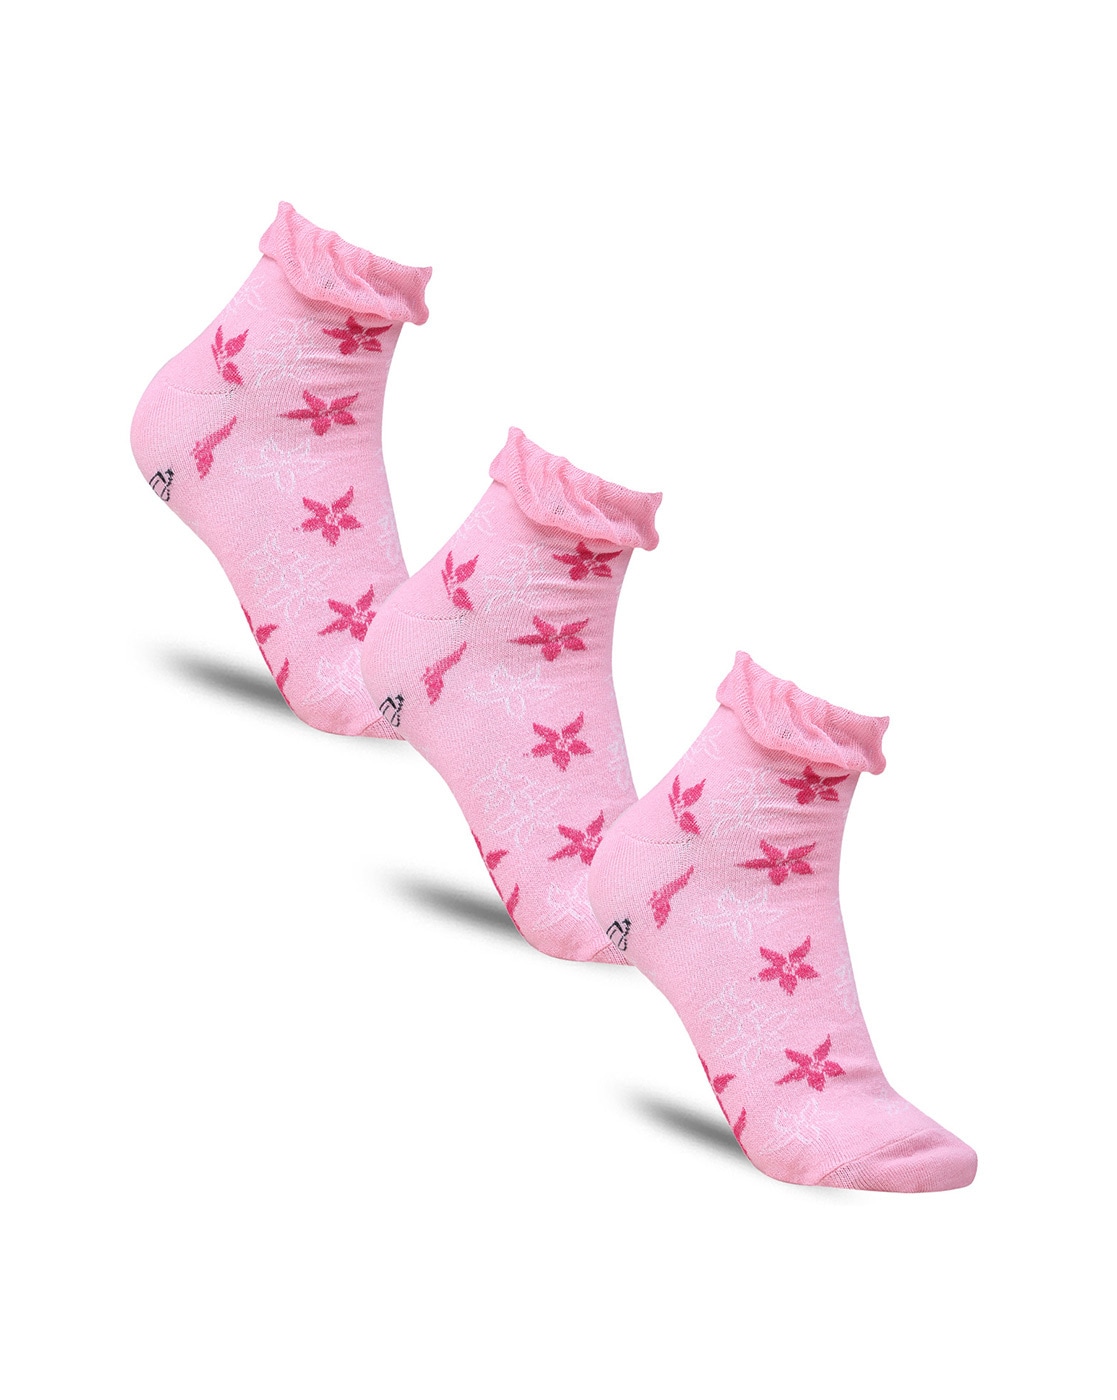 Pink Socks - Buy Pink Socks Online Starting at Just ₹99